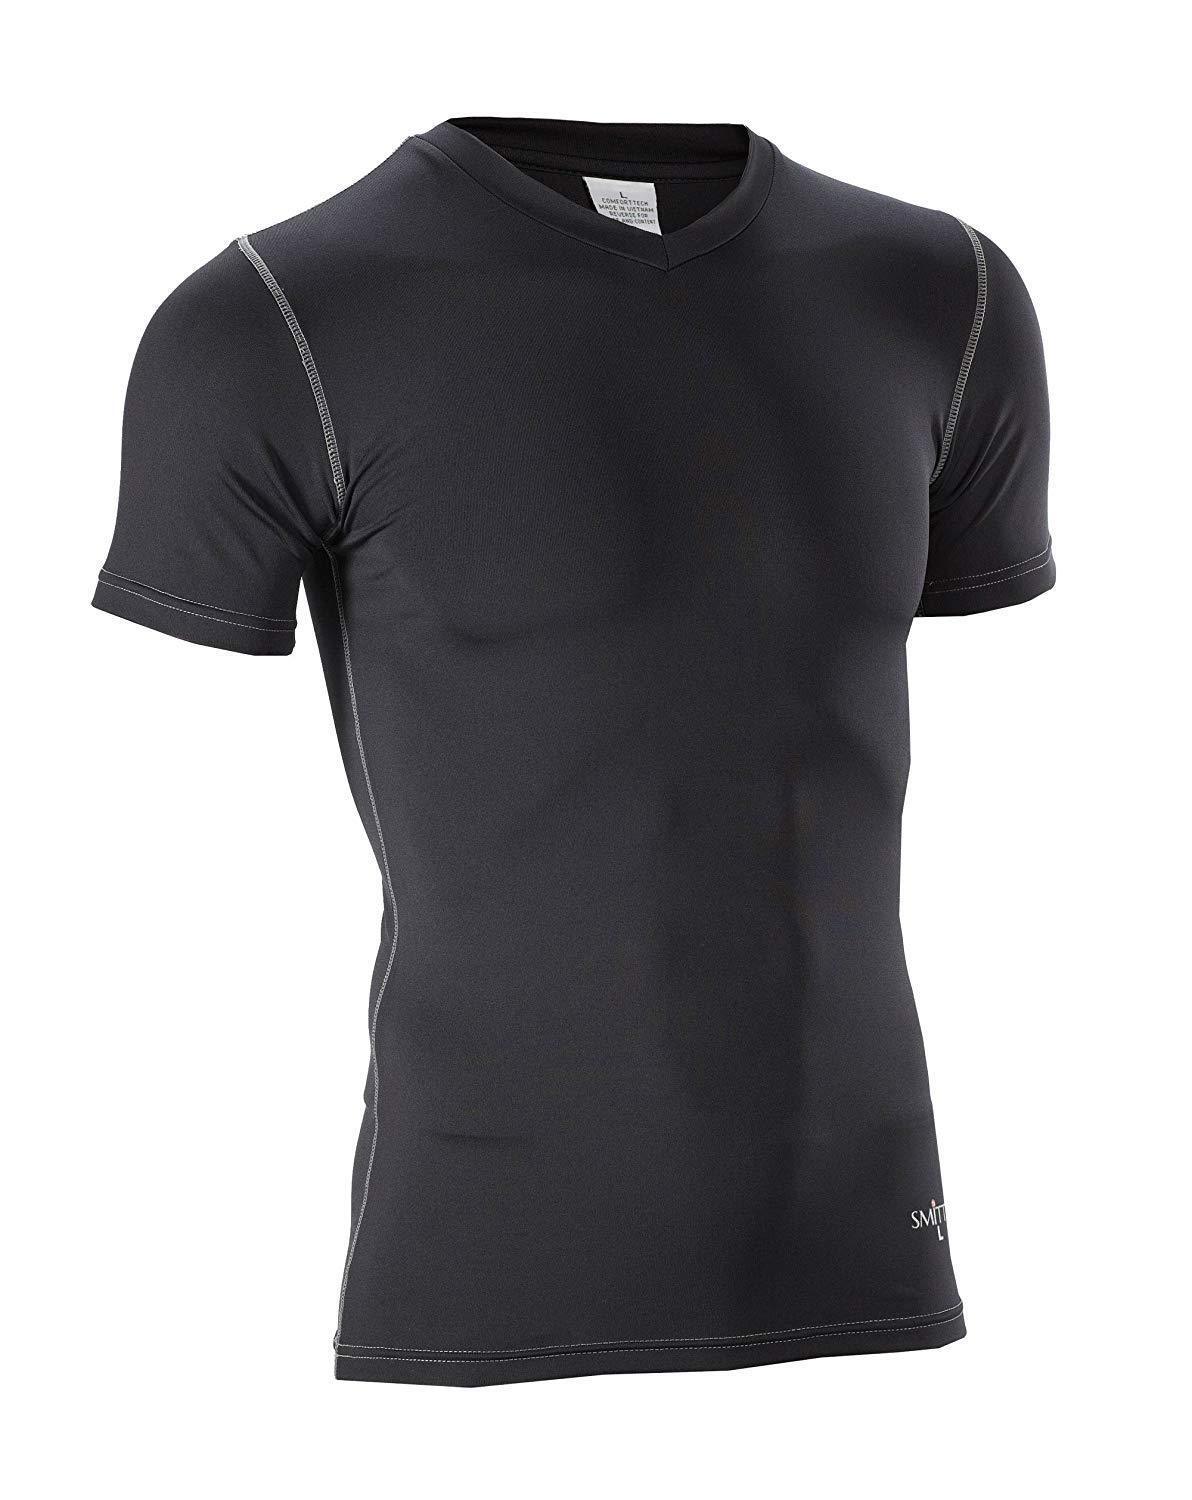 Primary image for SMITTY | BKS-411 | Black | Compression Short Sleeve V- Neck Shirt | Polyester